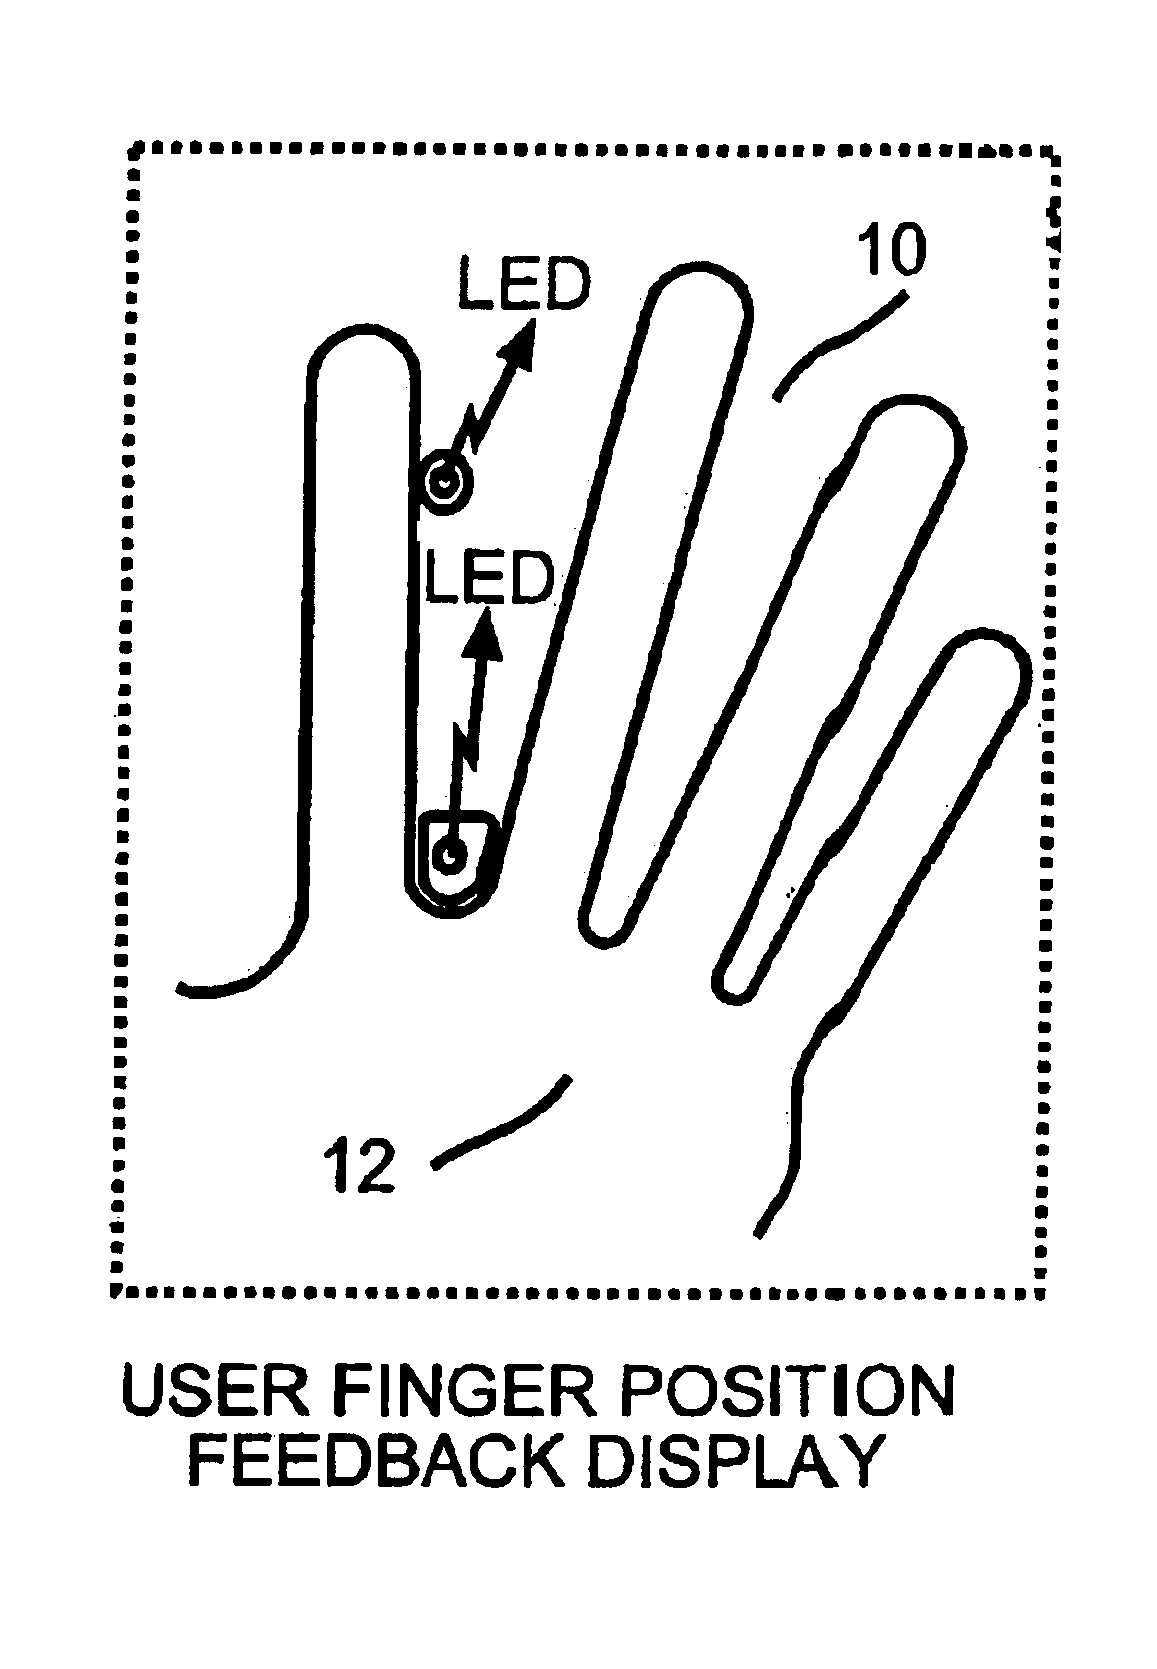 Left hand right hand invariant dynamic finger positioning guide